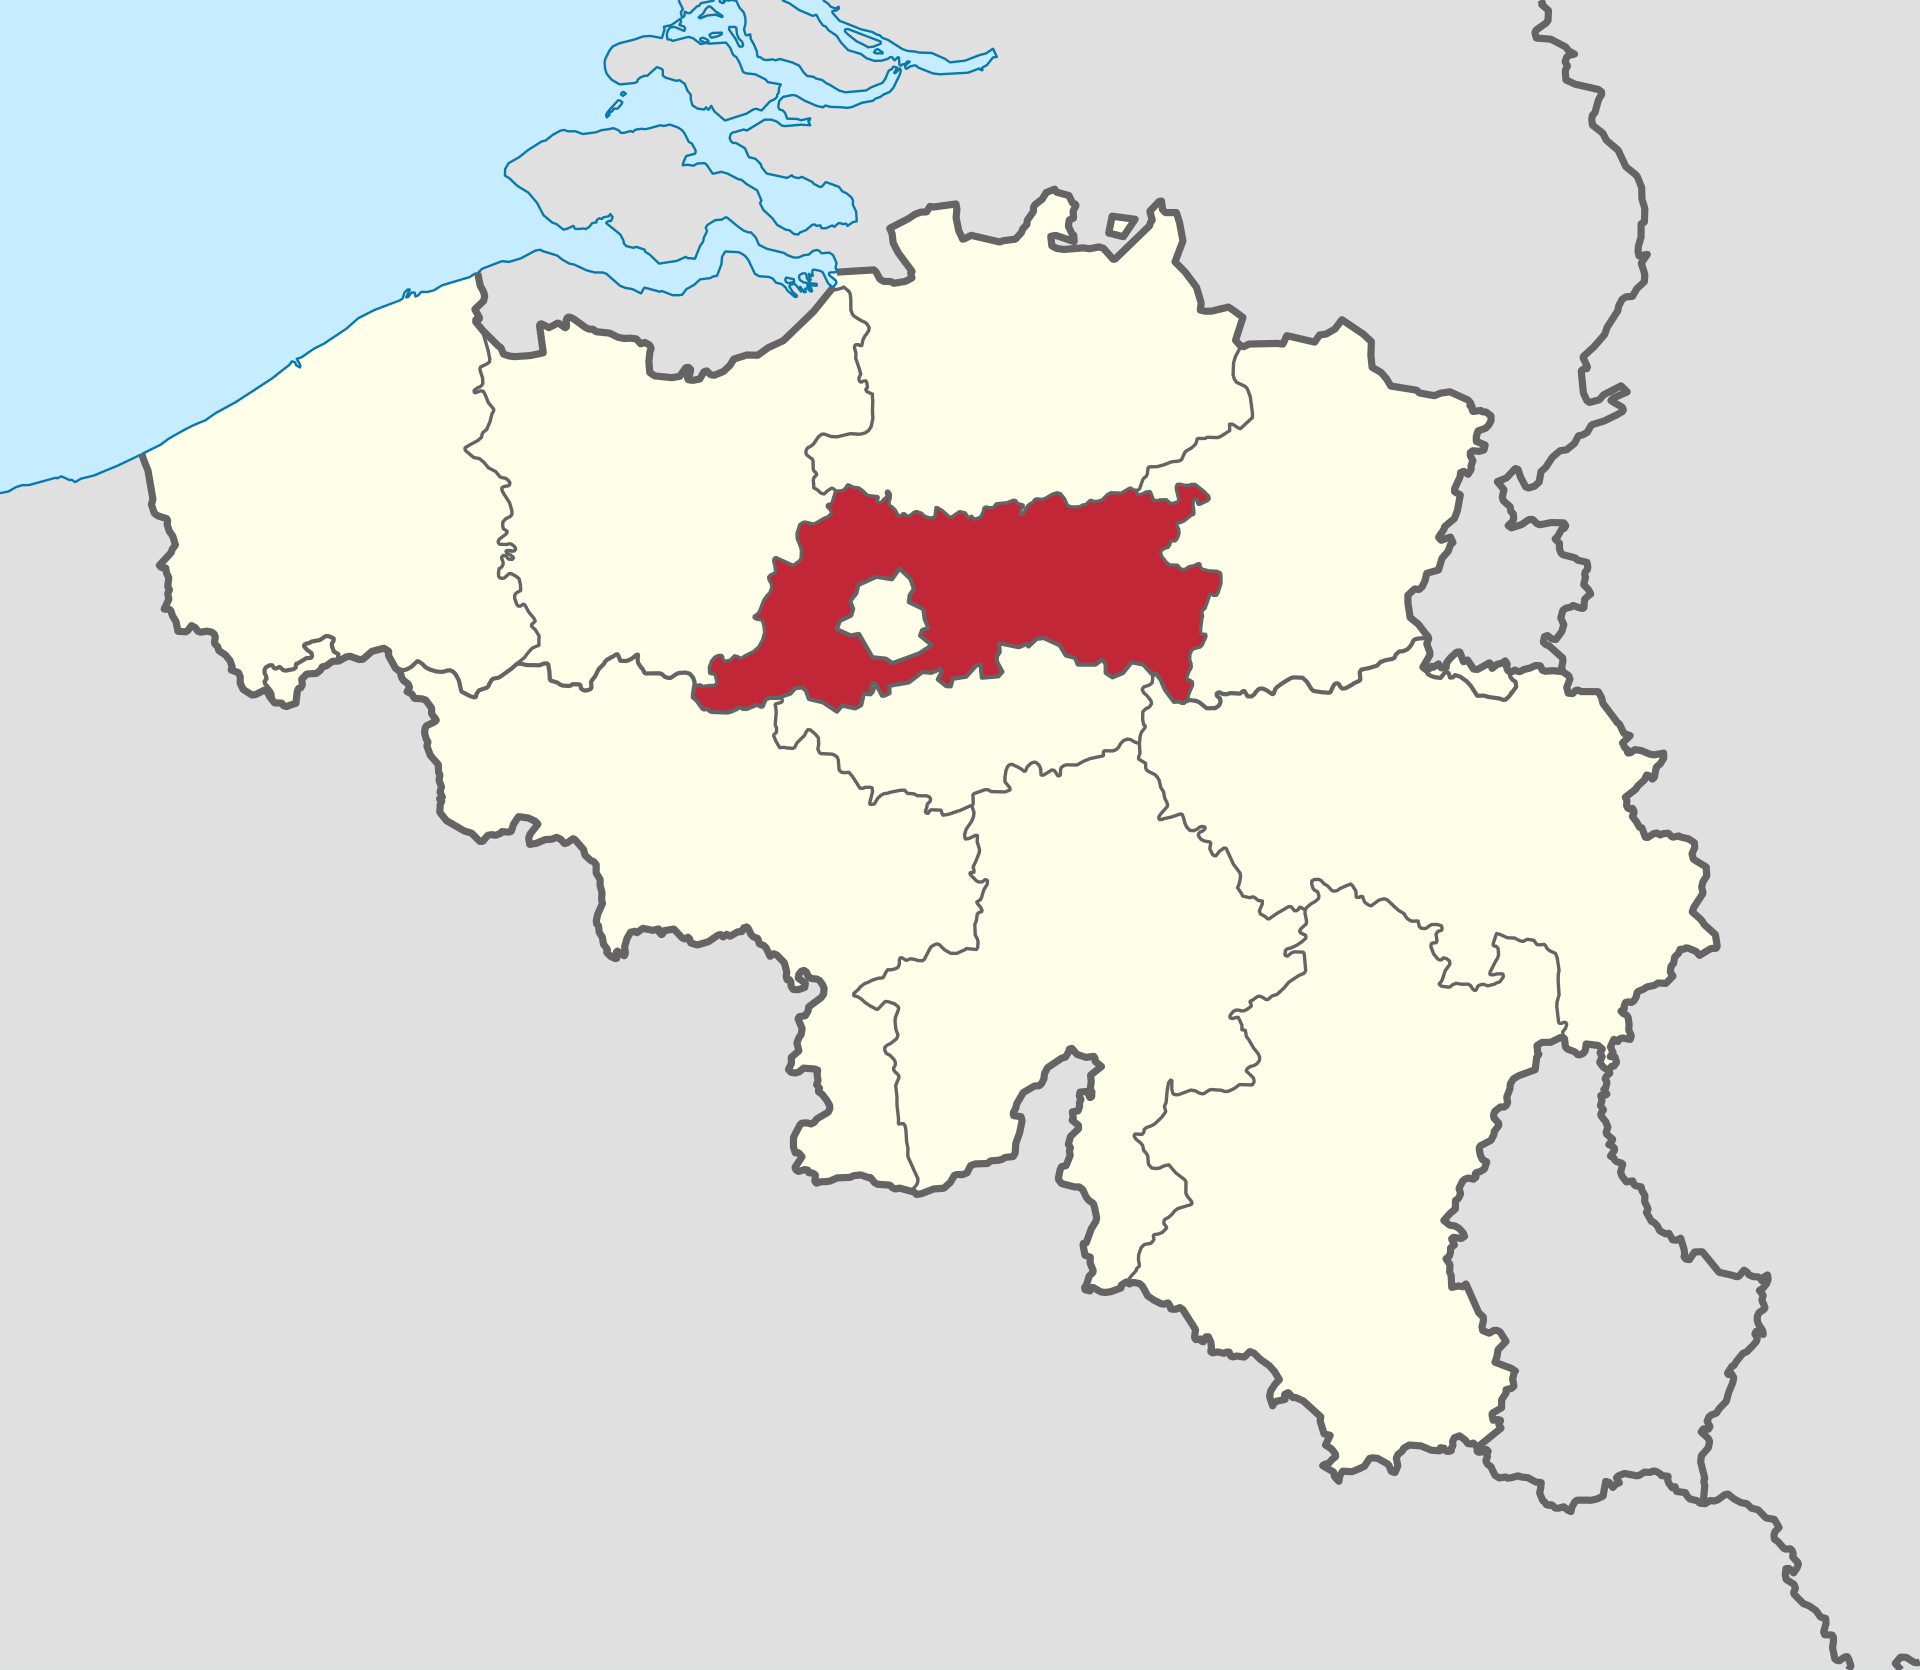 Cars And Dust Urbex location or around the region Vlaams-Brabant (Flanders), Belgium